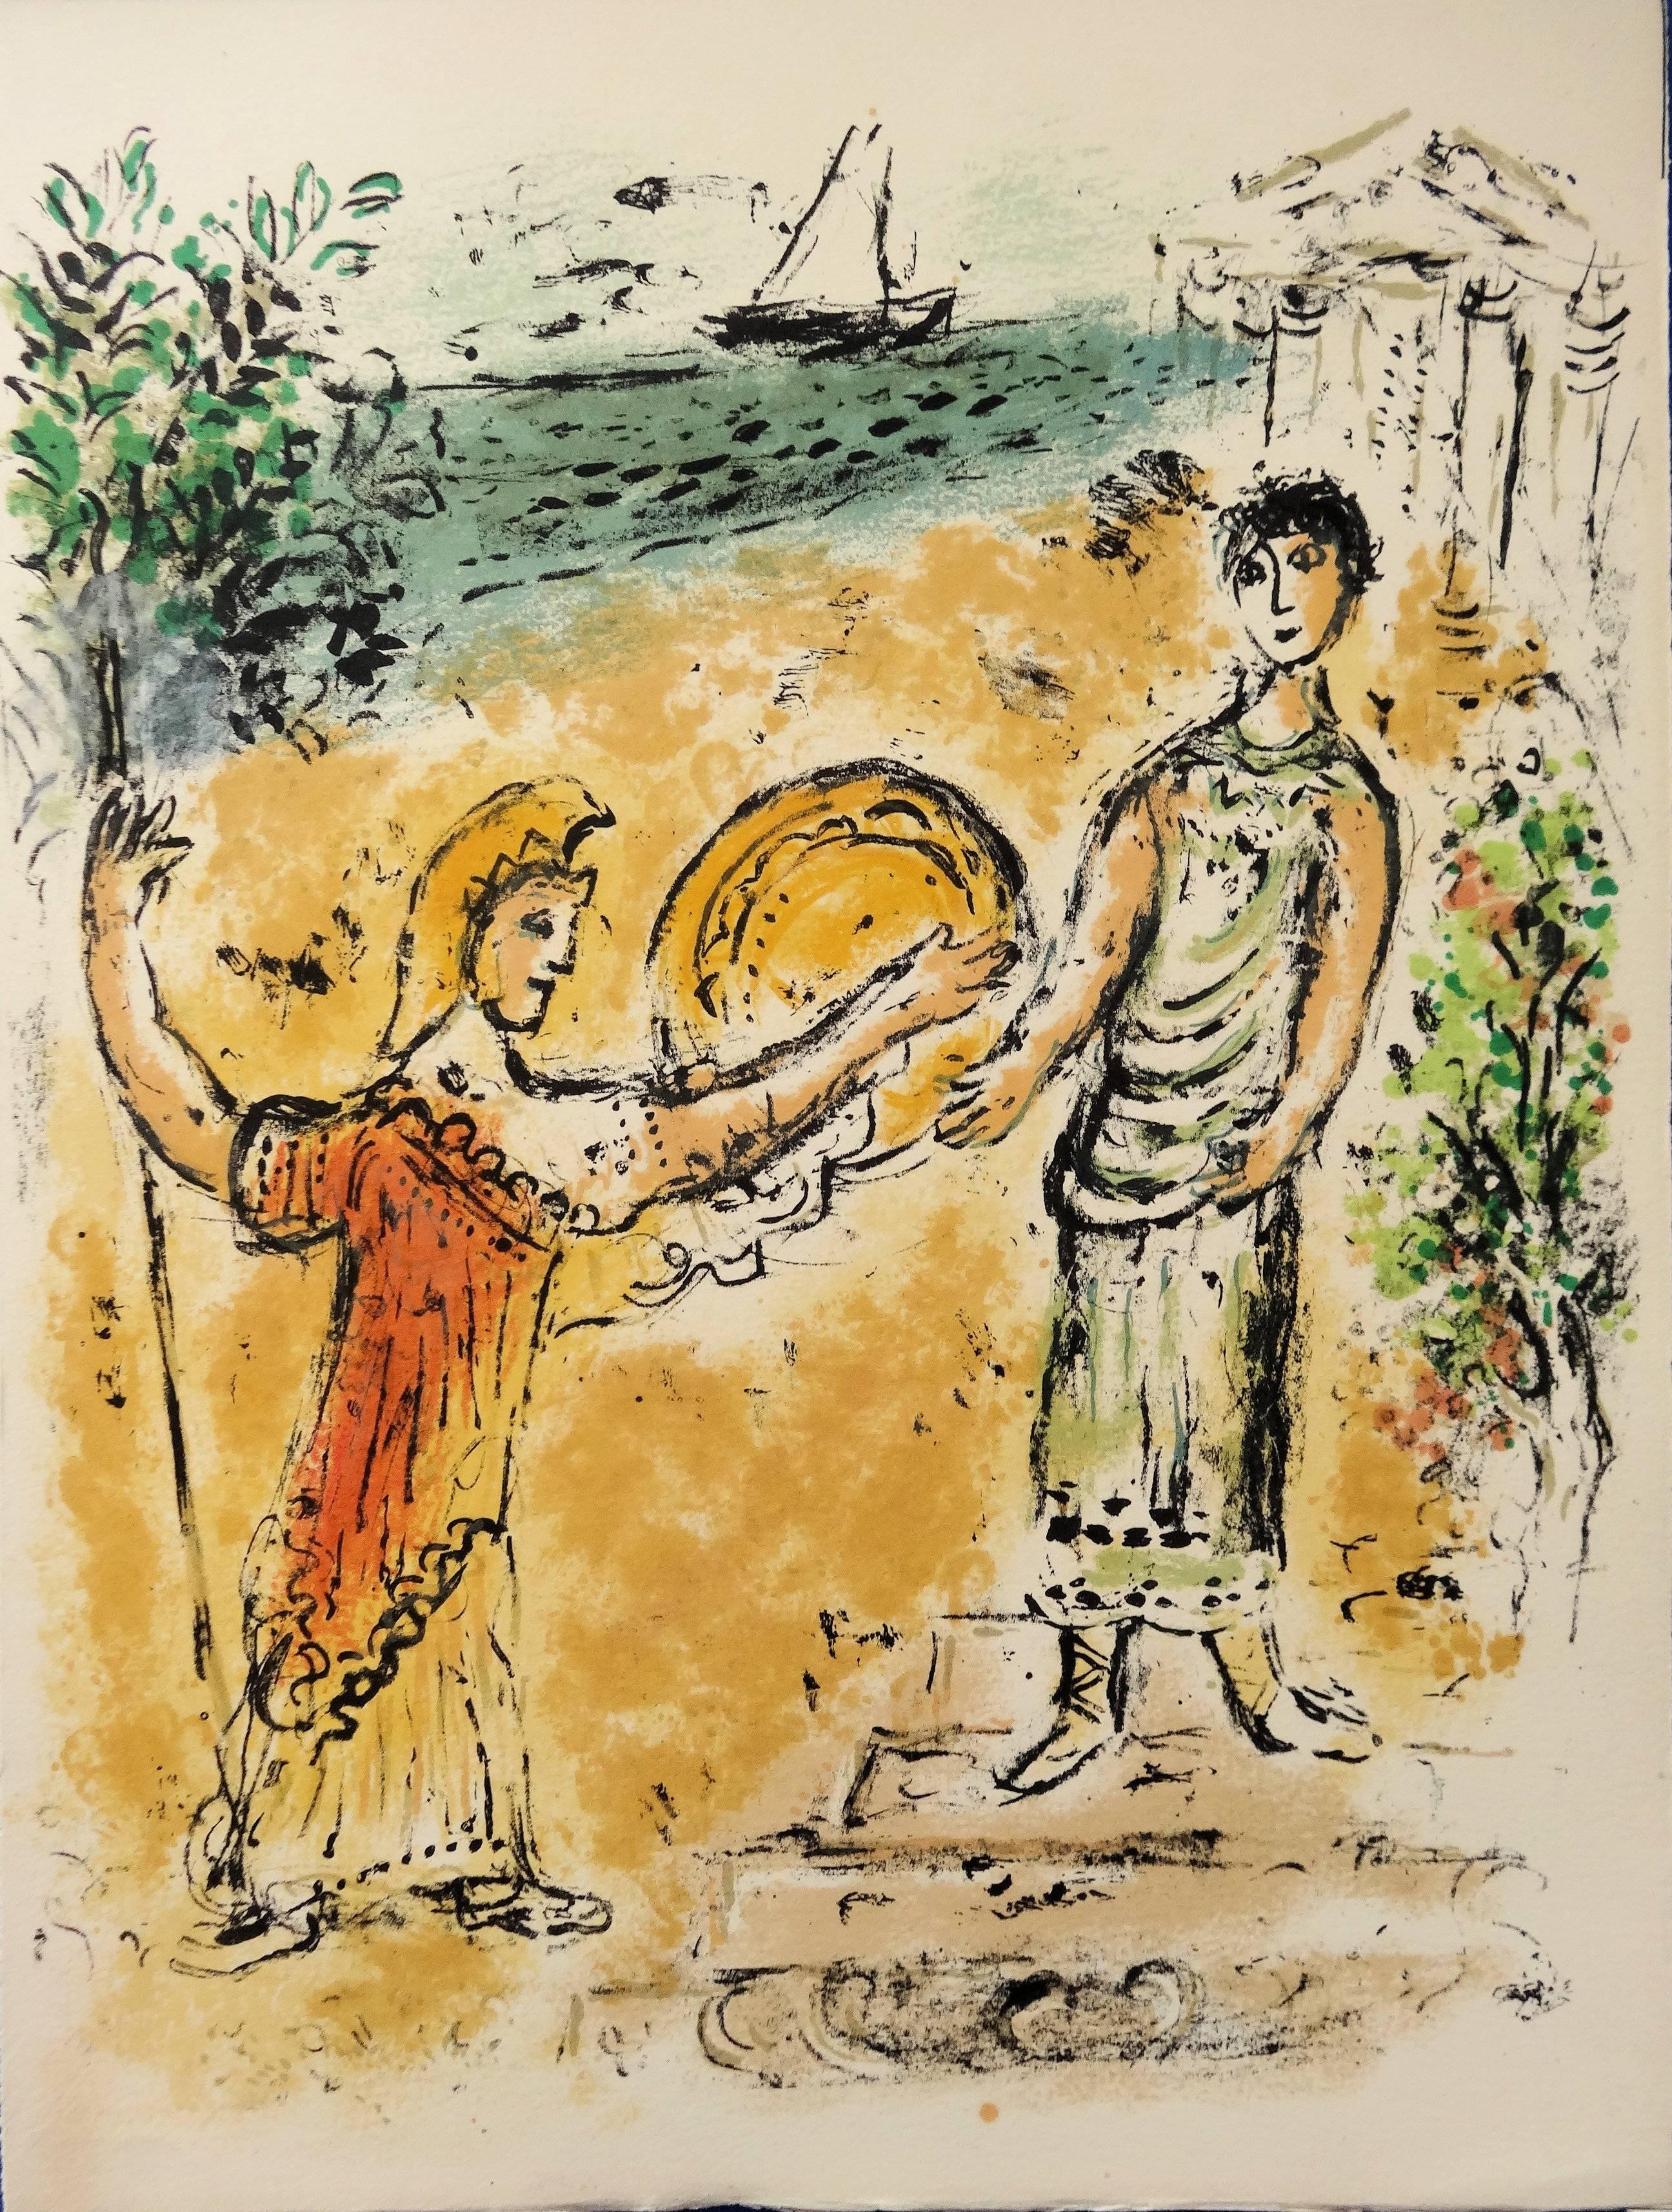 Marc Chagall Figurative Print - Odyssey : Odysseus and Telemachus - Original lithograph - Mourlot 1975